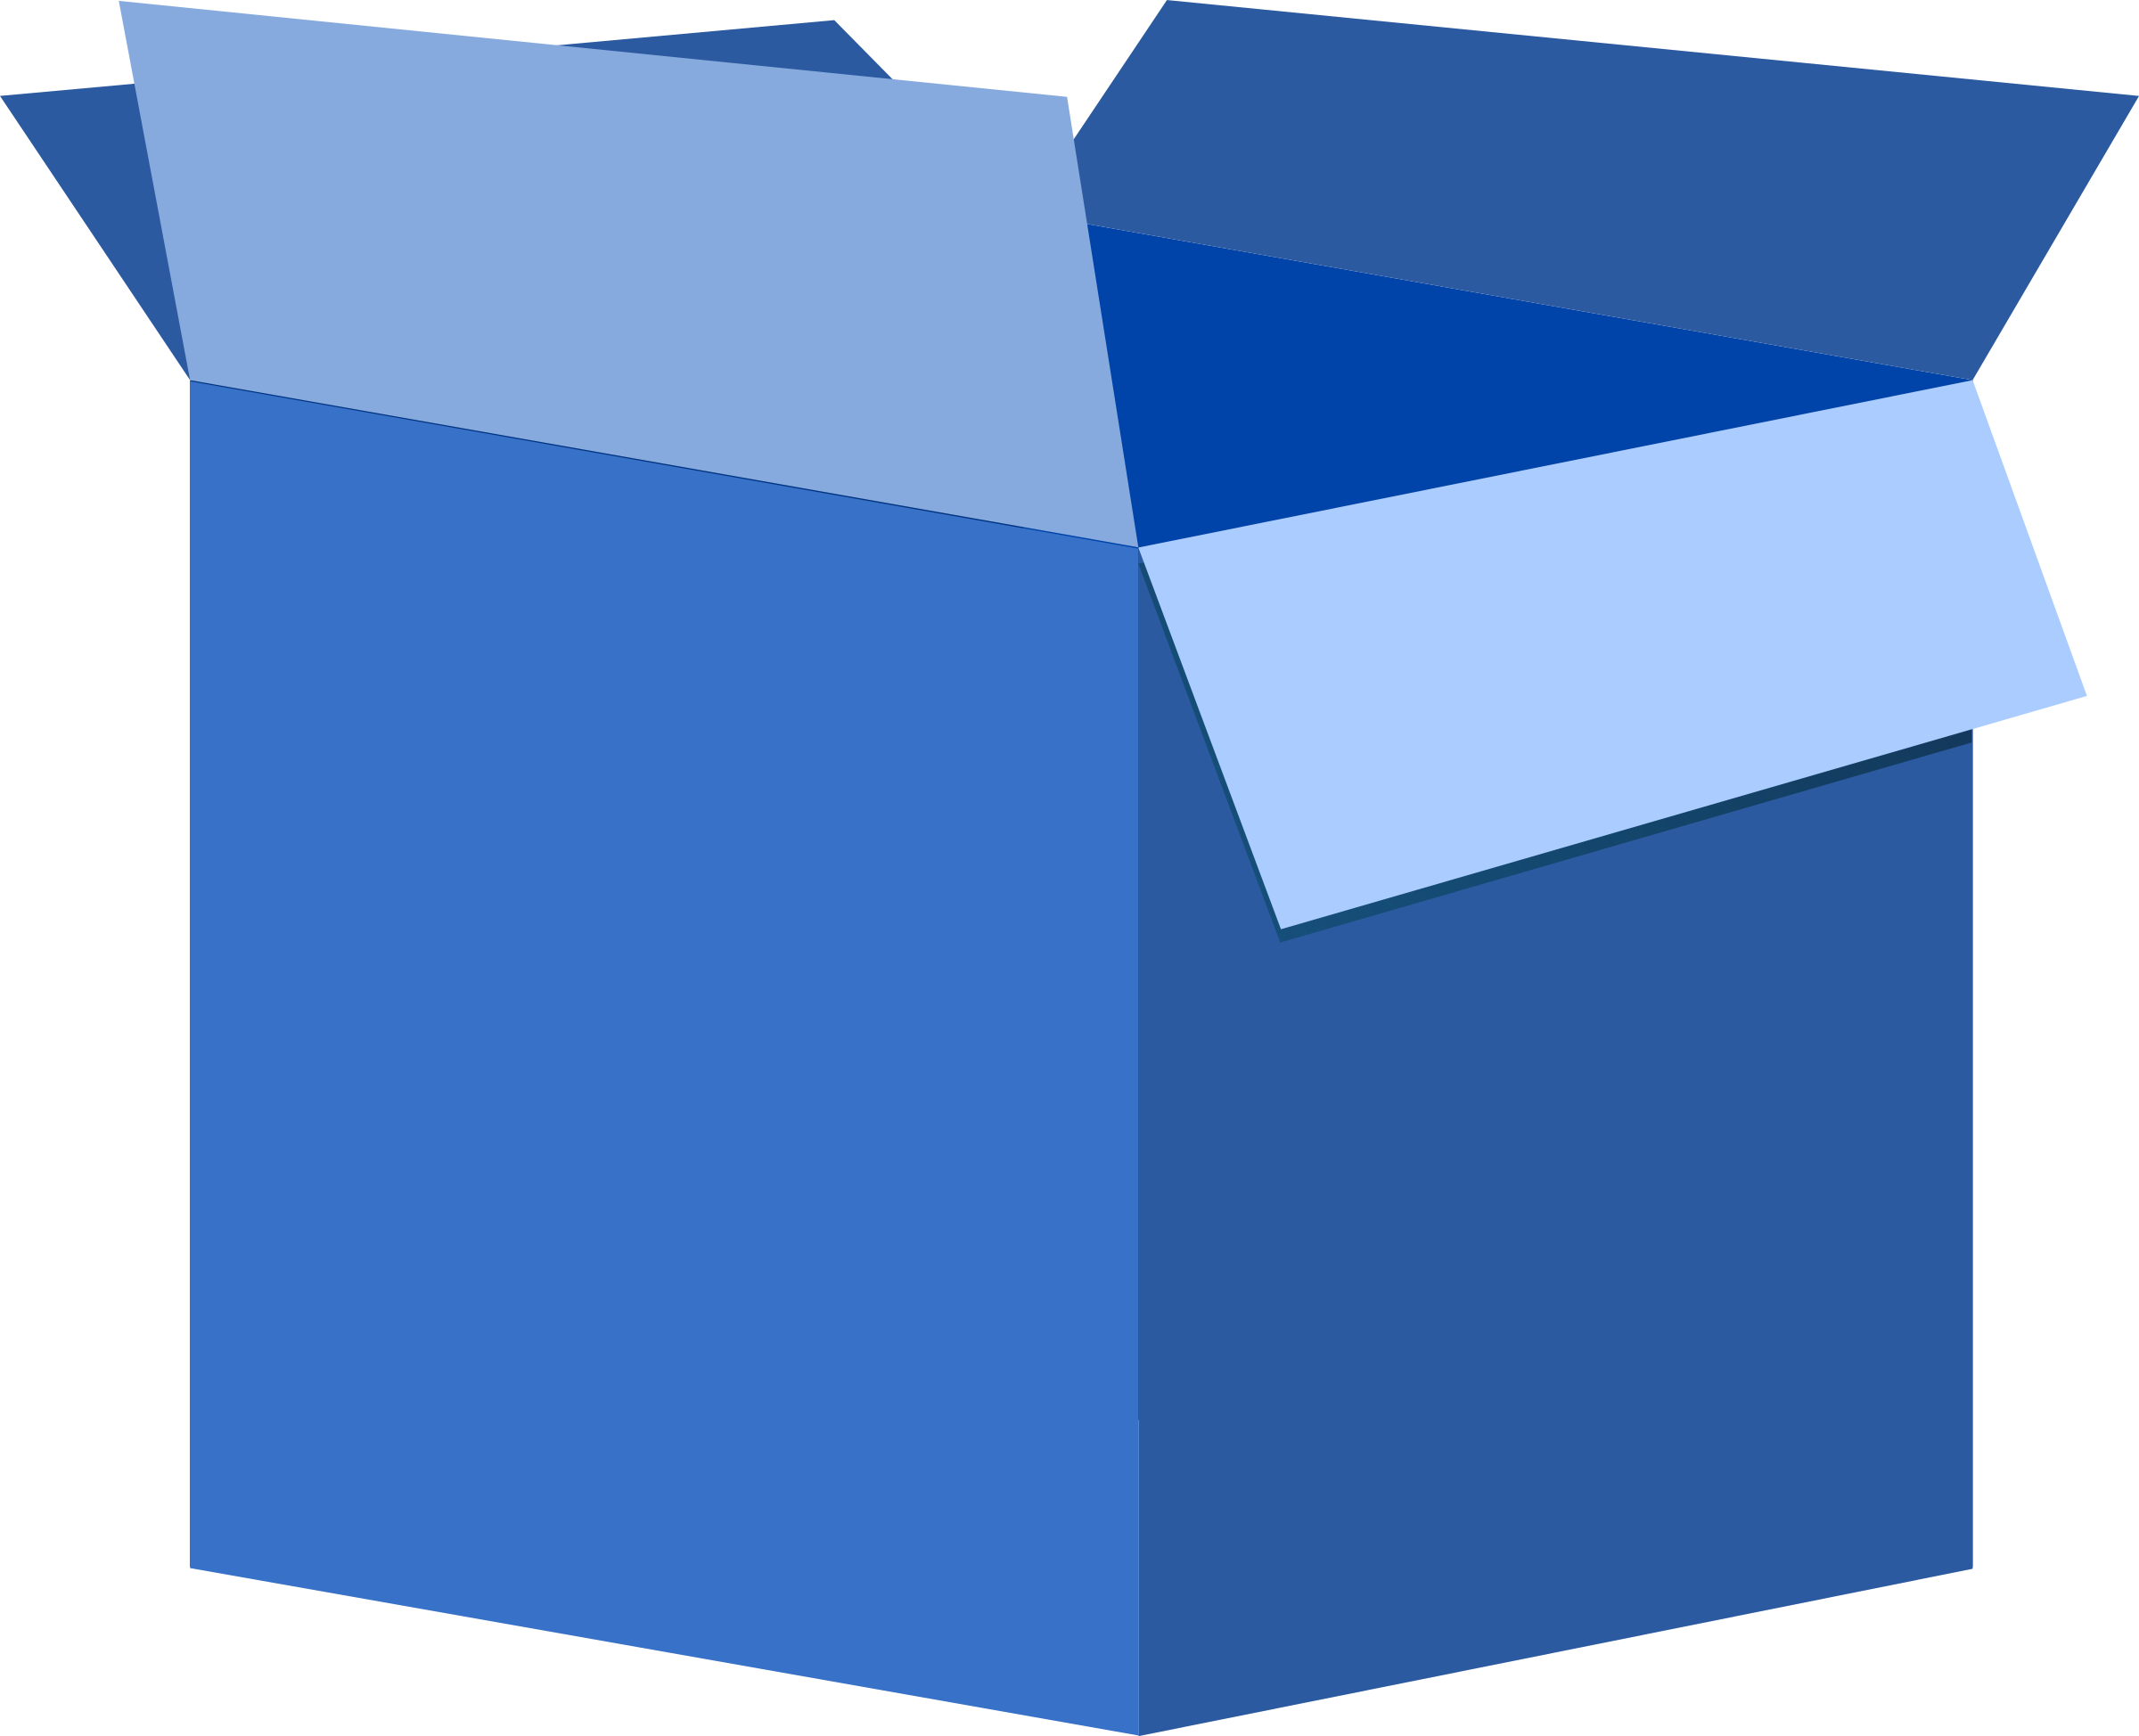 Blue Box (синяя коробка). Подарочные коробки синие. Открытая подарочная коробка. Коробка на прозрачном фоне.